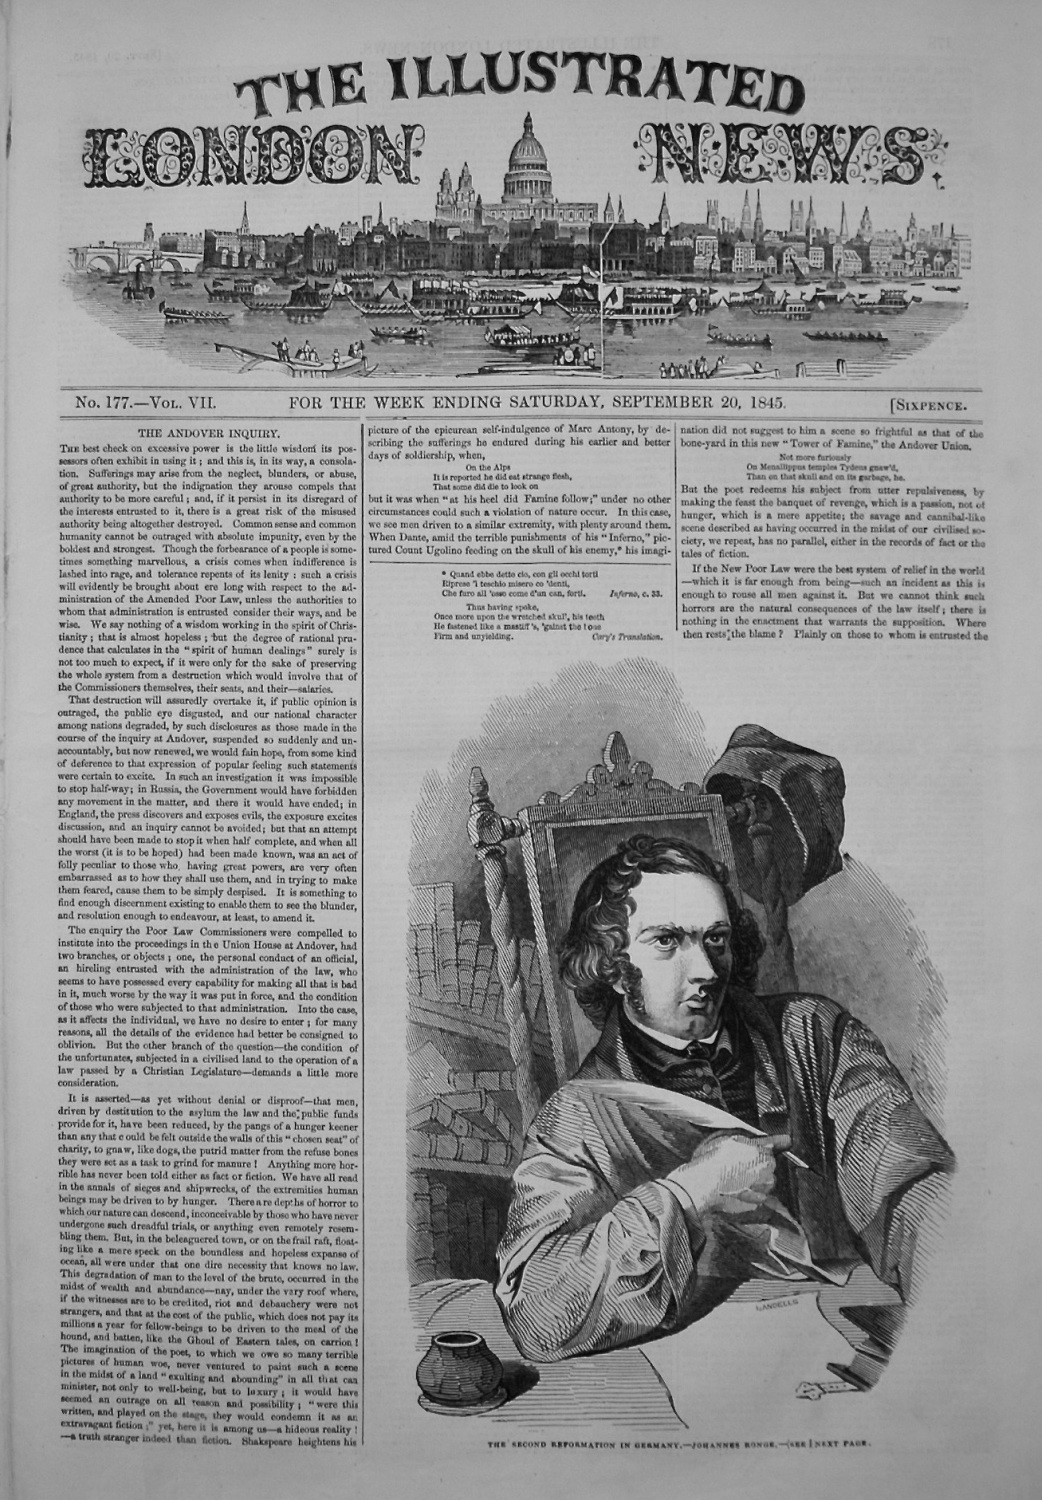 Illustrated London News September 20th 1845.